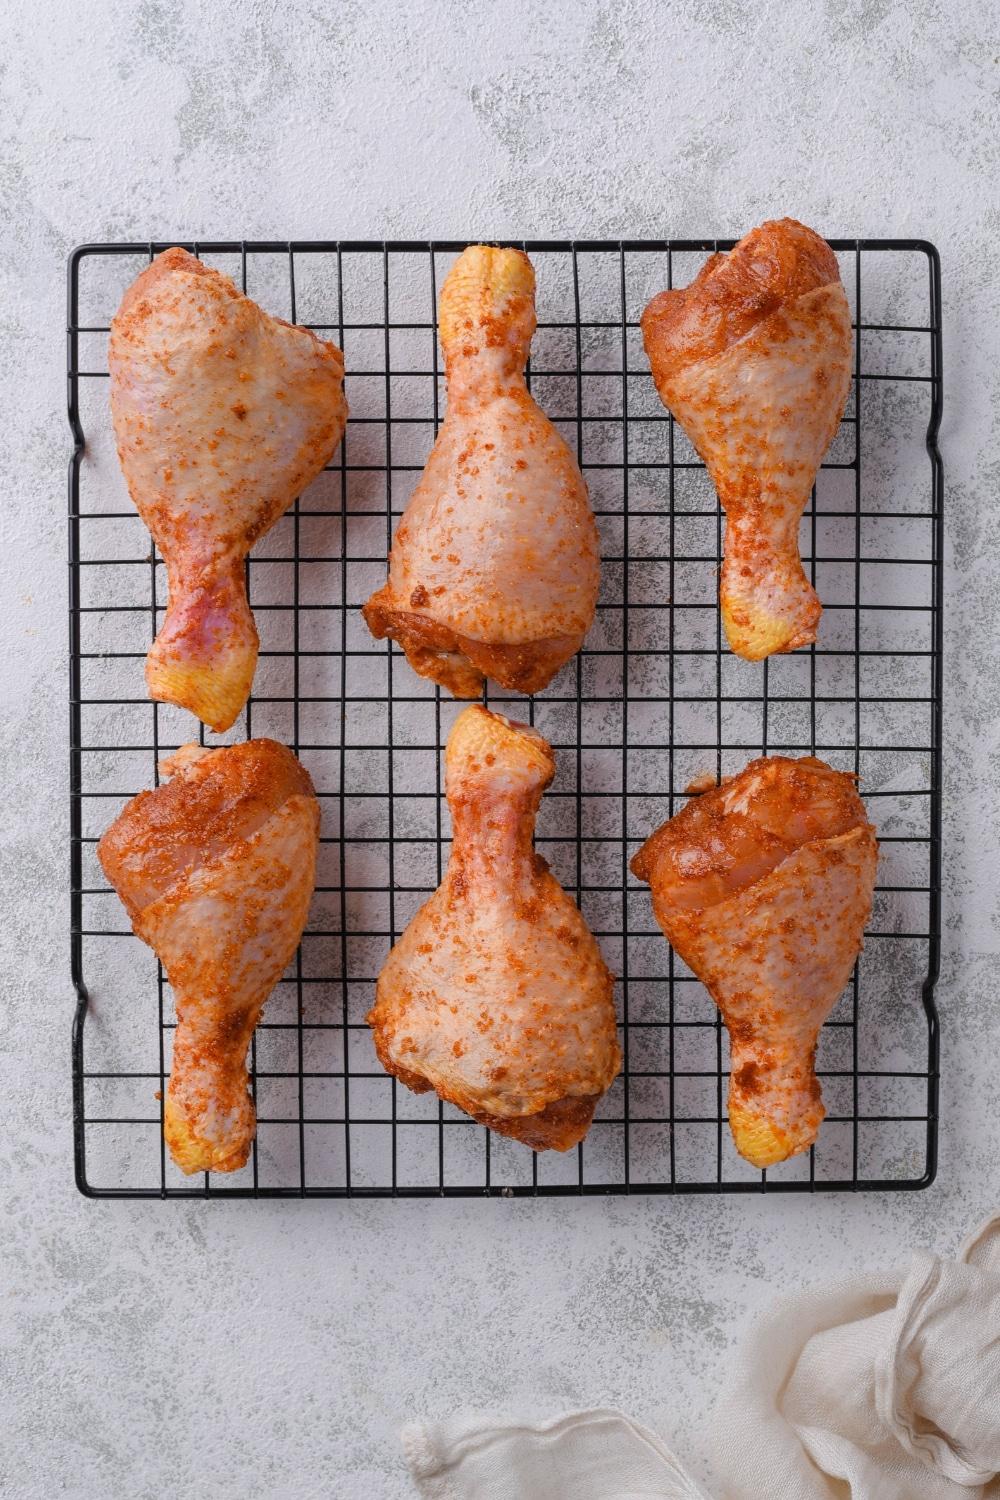 Six seasoned raw chicken drumsticks on a drying rack.